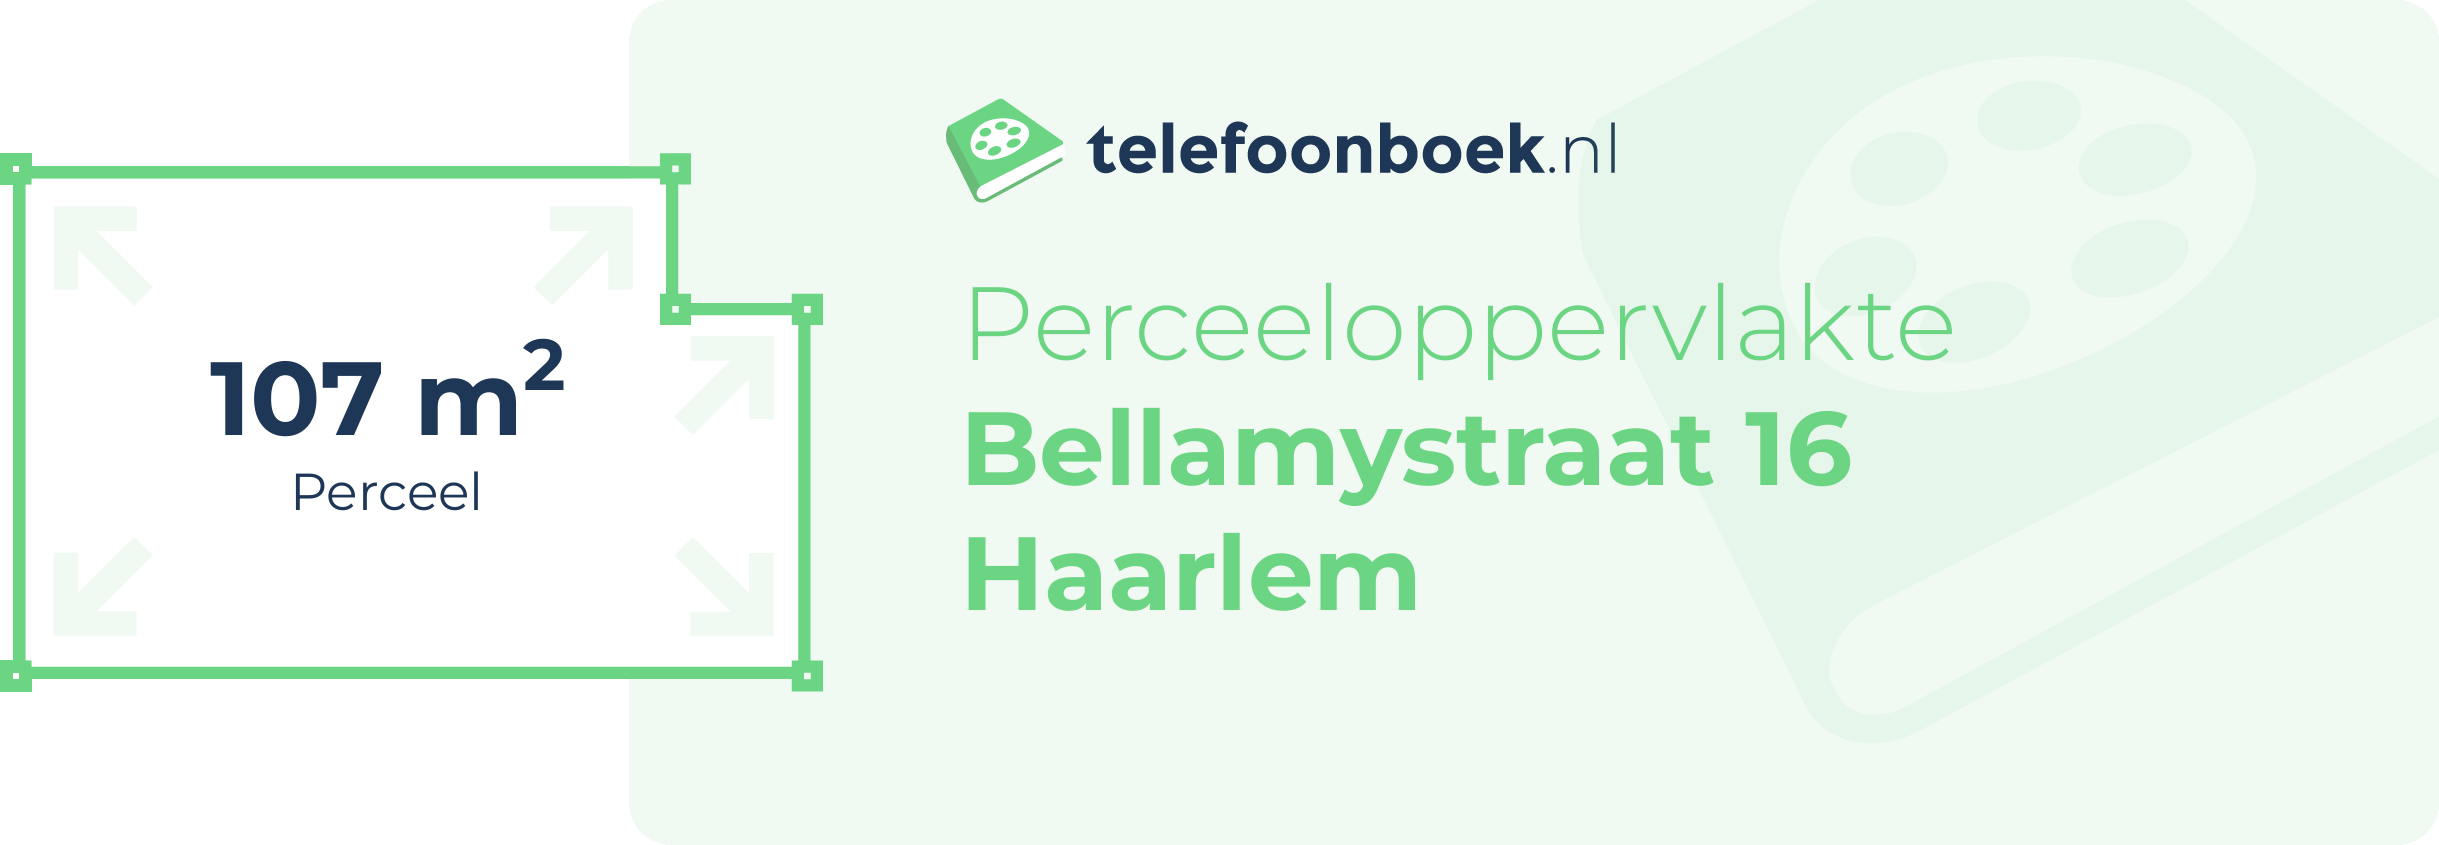 Perceeloppervlakte Bellamystraat 16 Haarlem